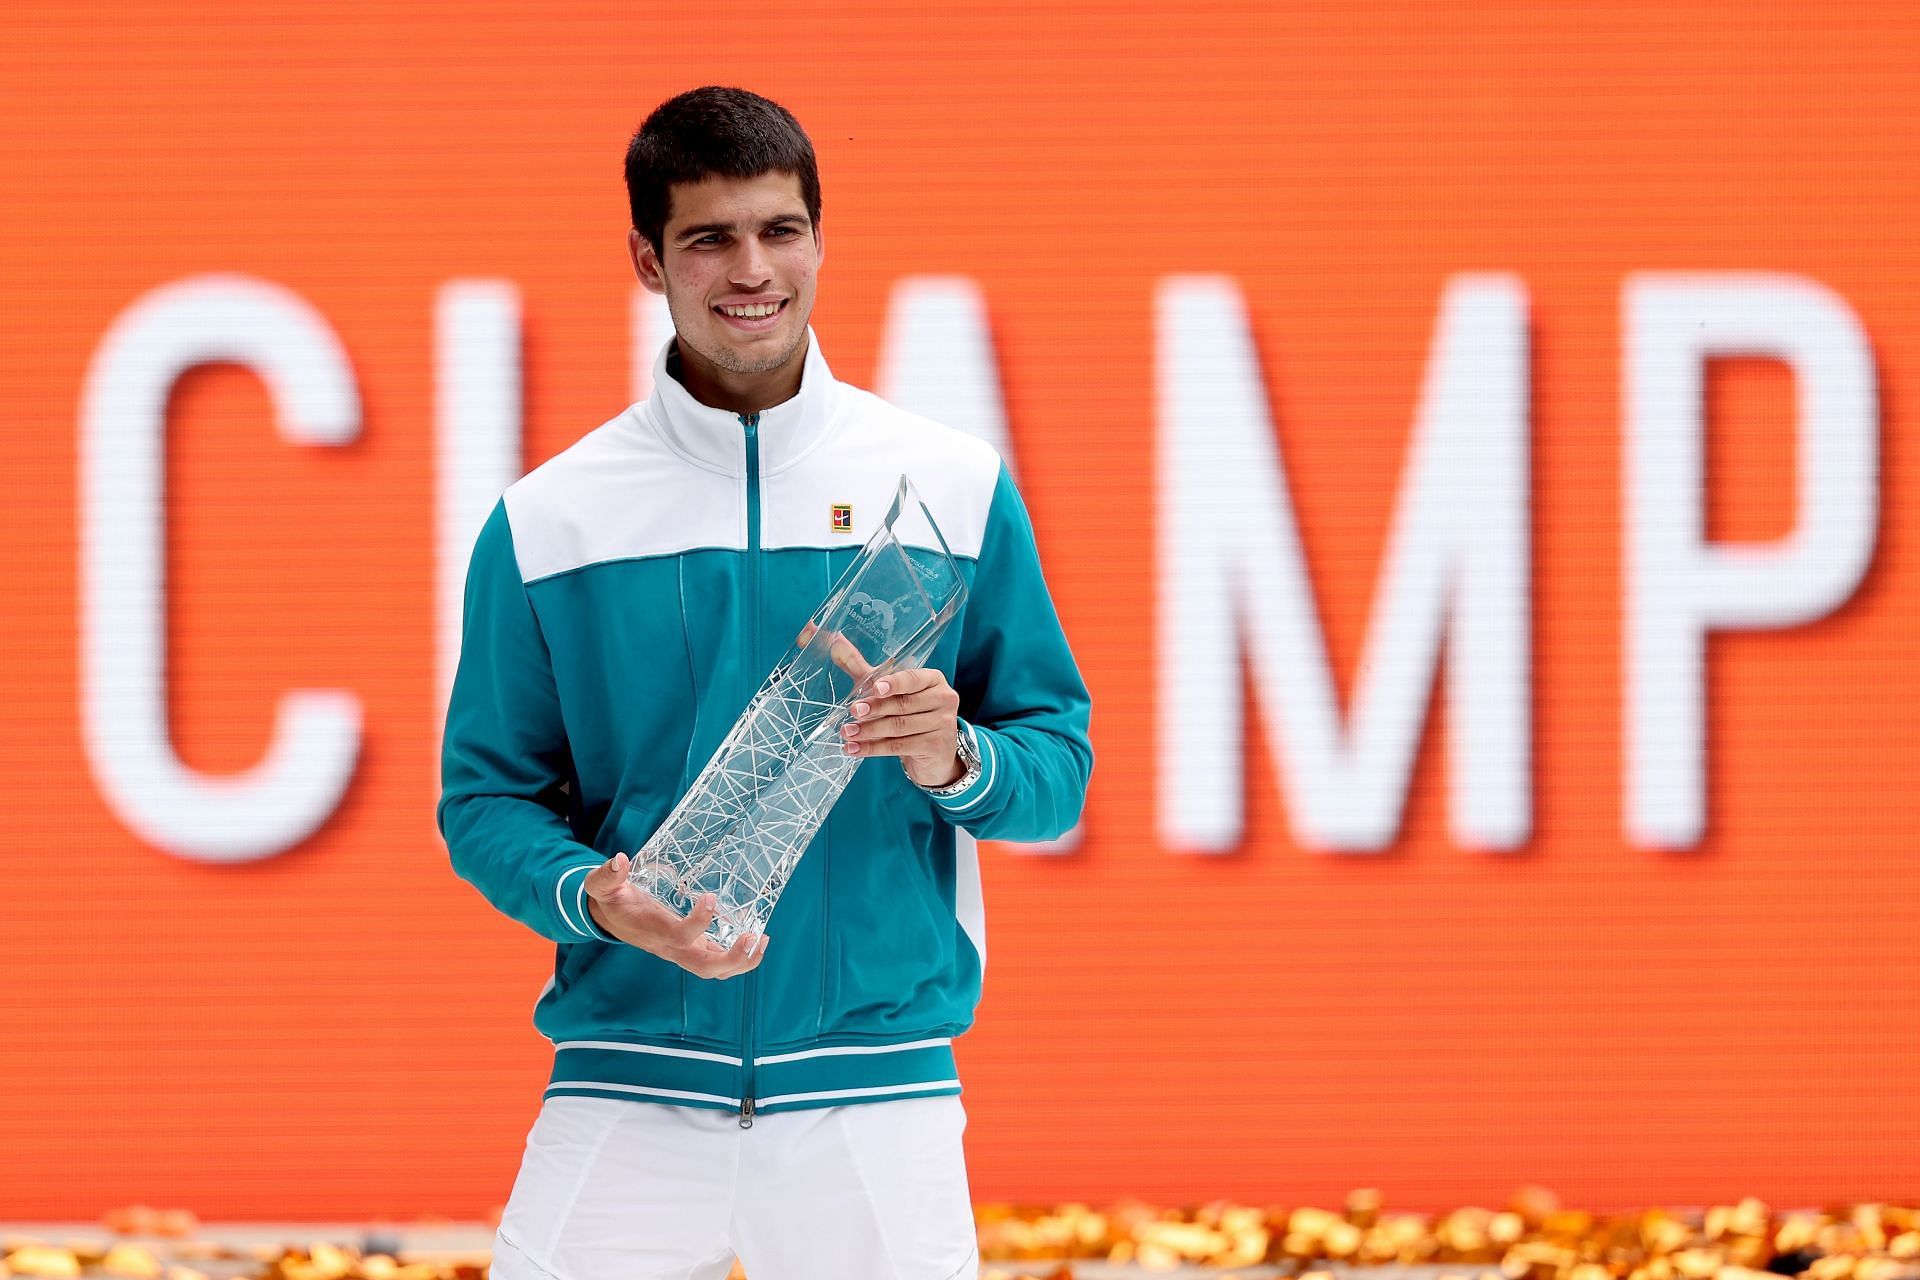 Carlos Alcaraz may trump Novak Djokovic as the man to beat at the Monte-Carlo Masters based on form